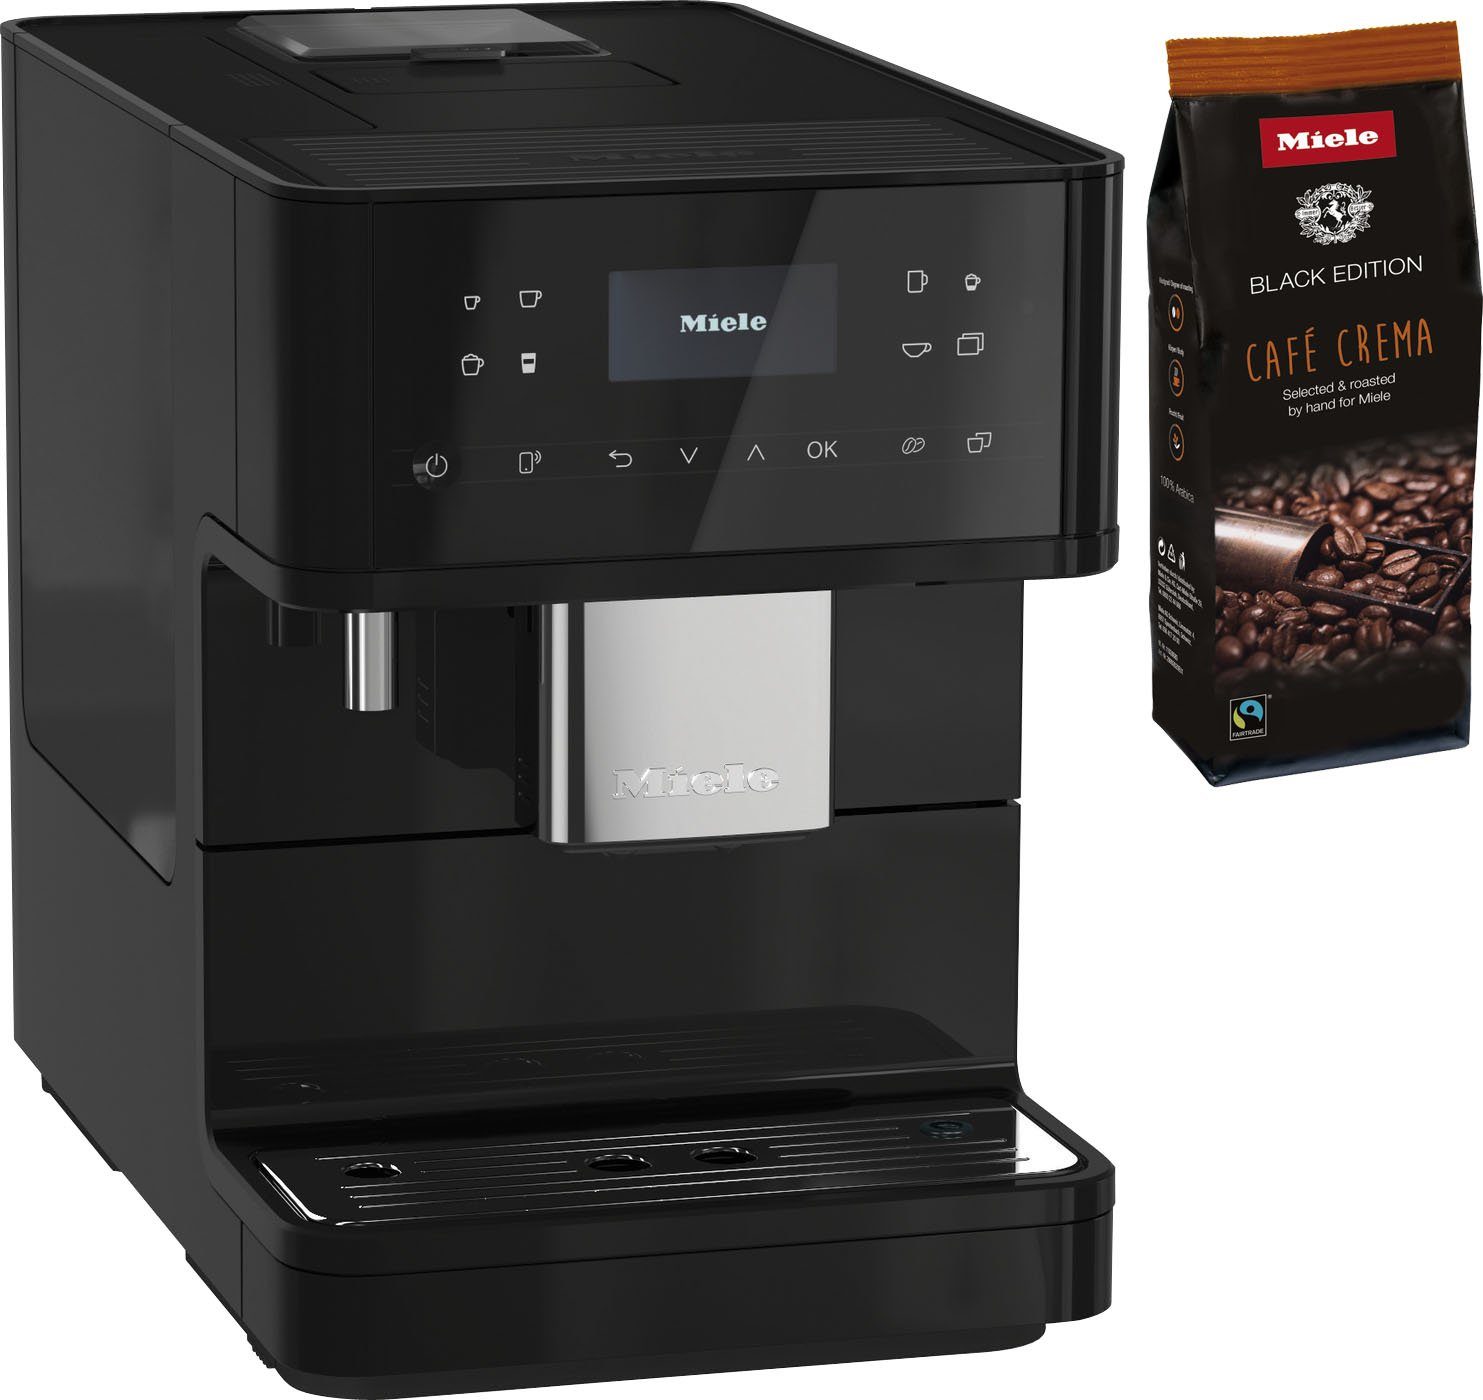 Genießerprofile, MilkPerfection, Kaffeevollautomat 6160 Kaffeekannenfunktion Miele CM